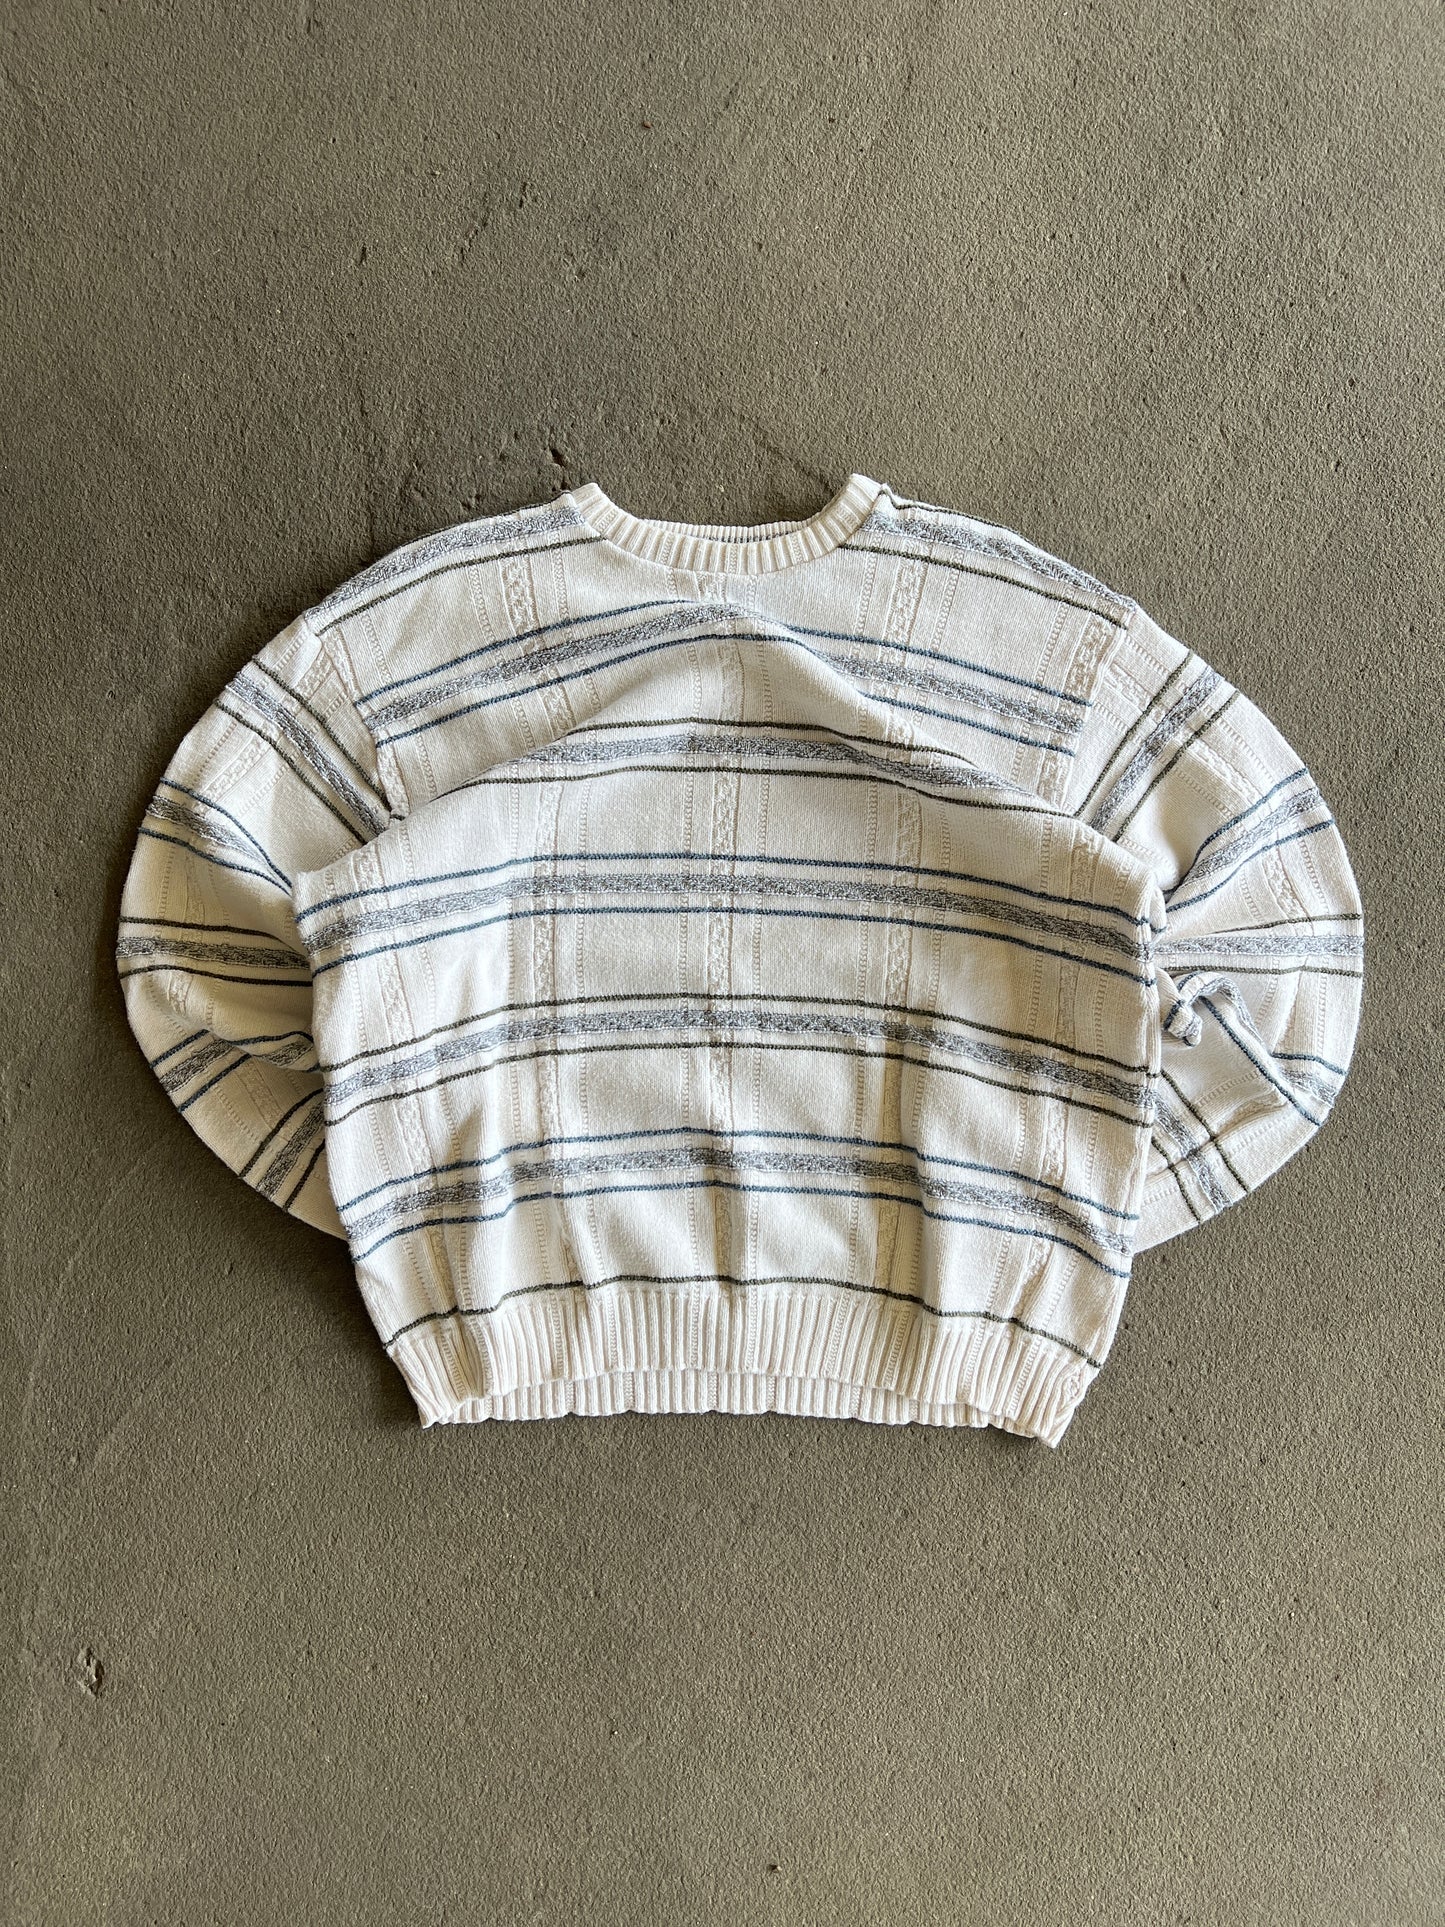 Vintage Knit White Sweater -XL